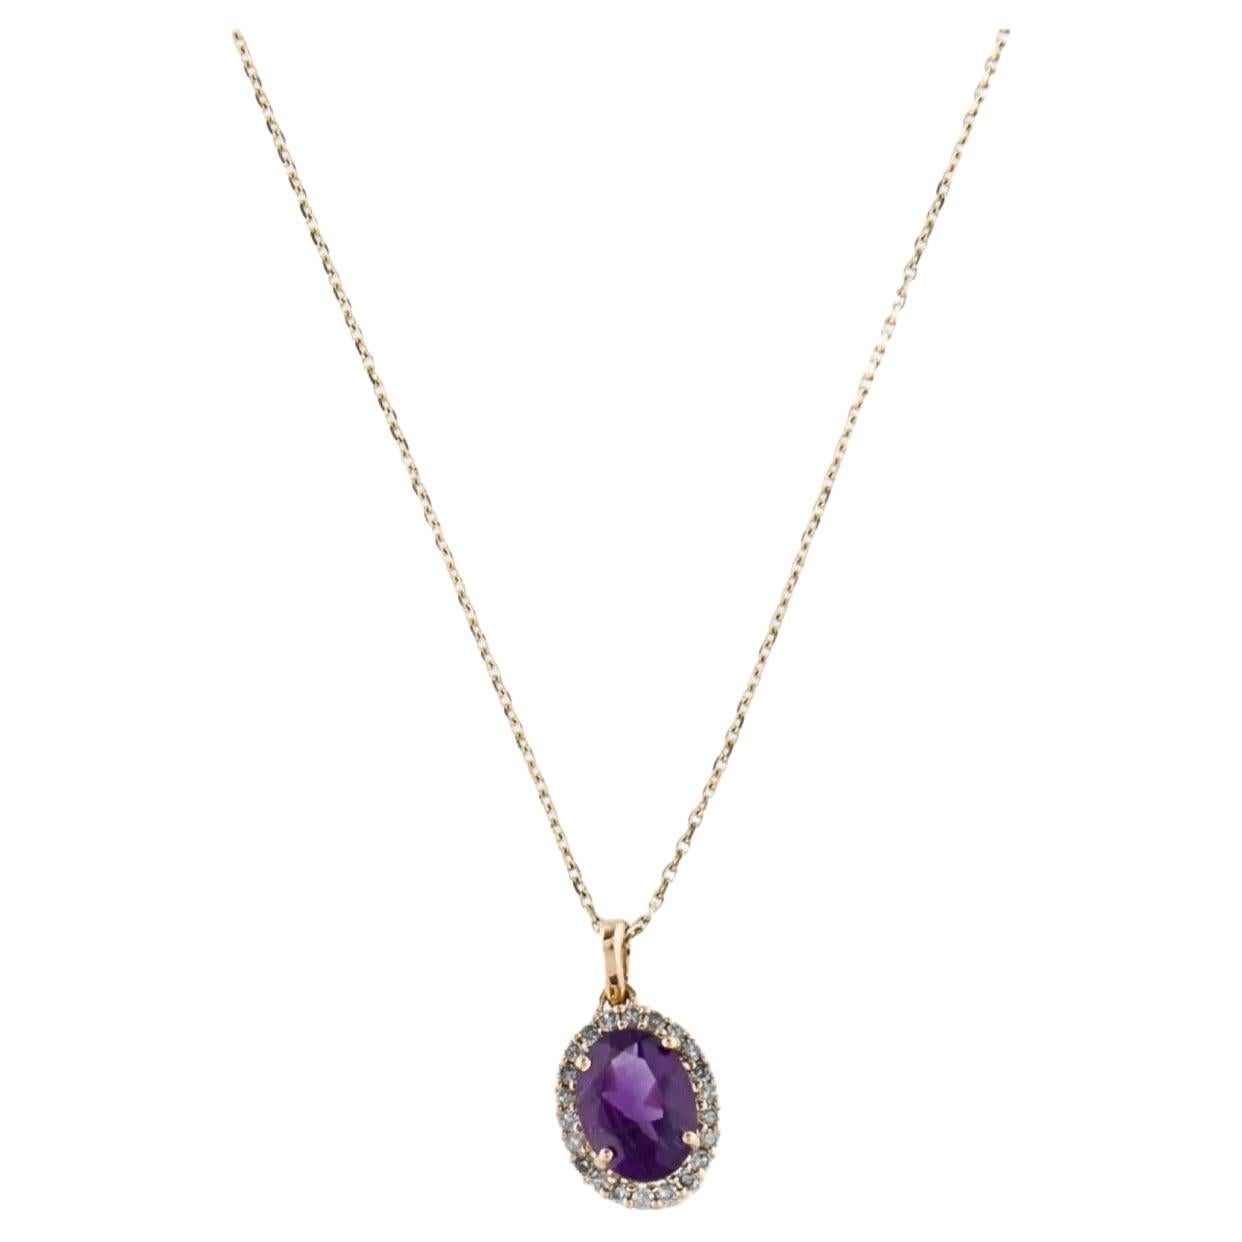 14K Amethyst Diamond Pendant Necklace - Vintage Style Jewelry, Statement Piece